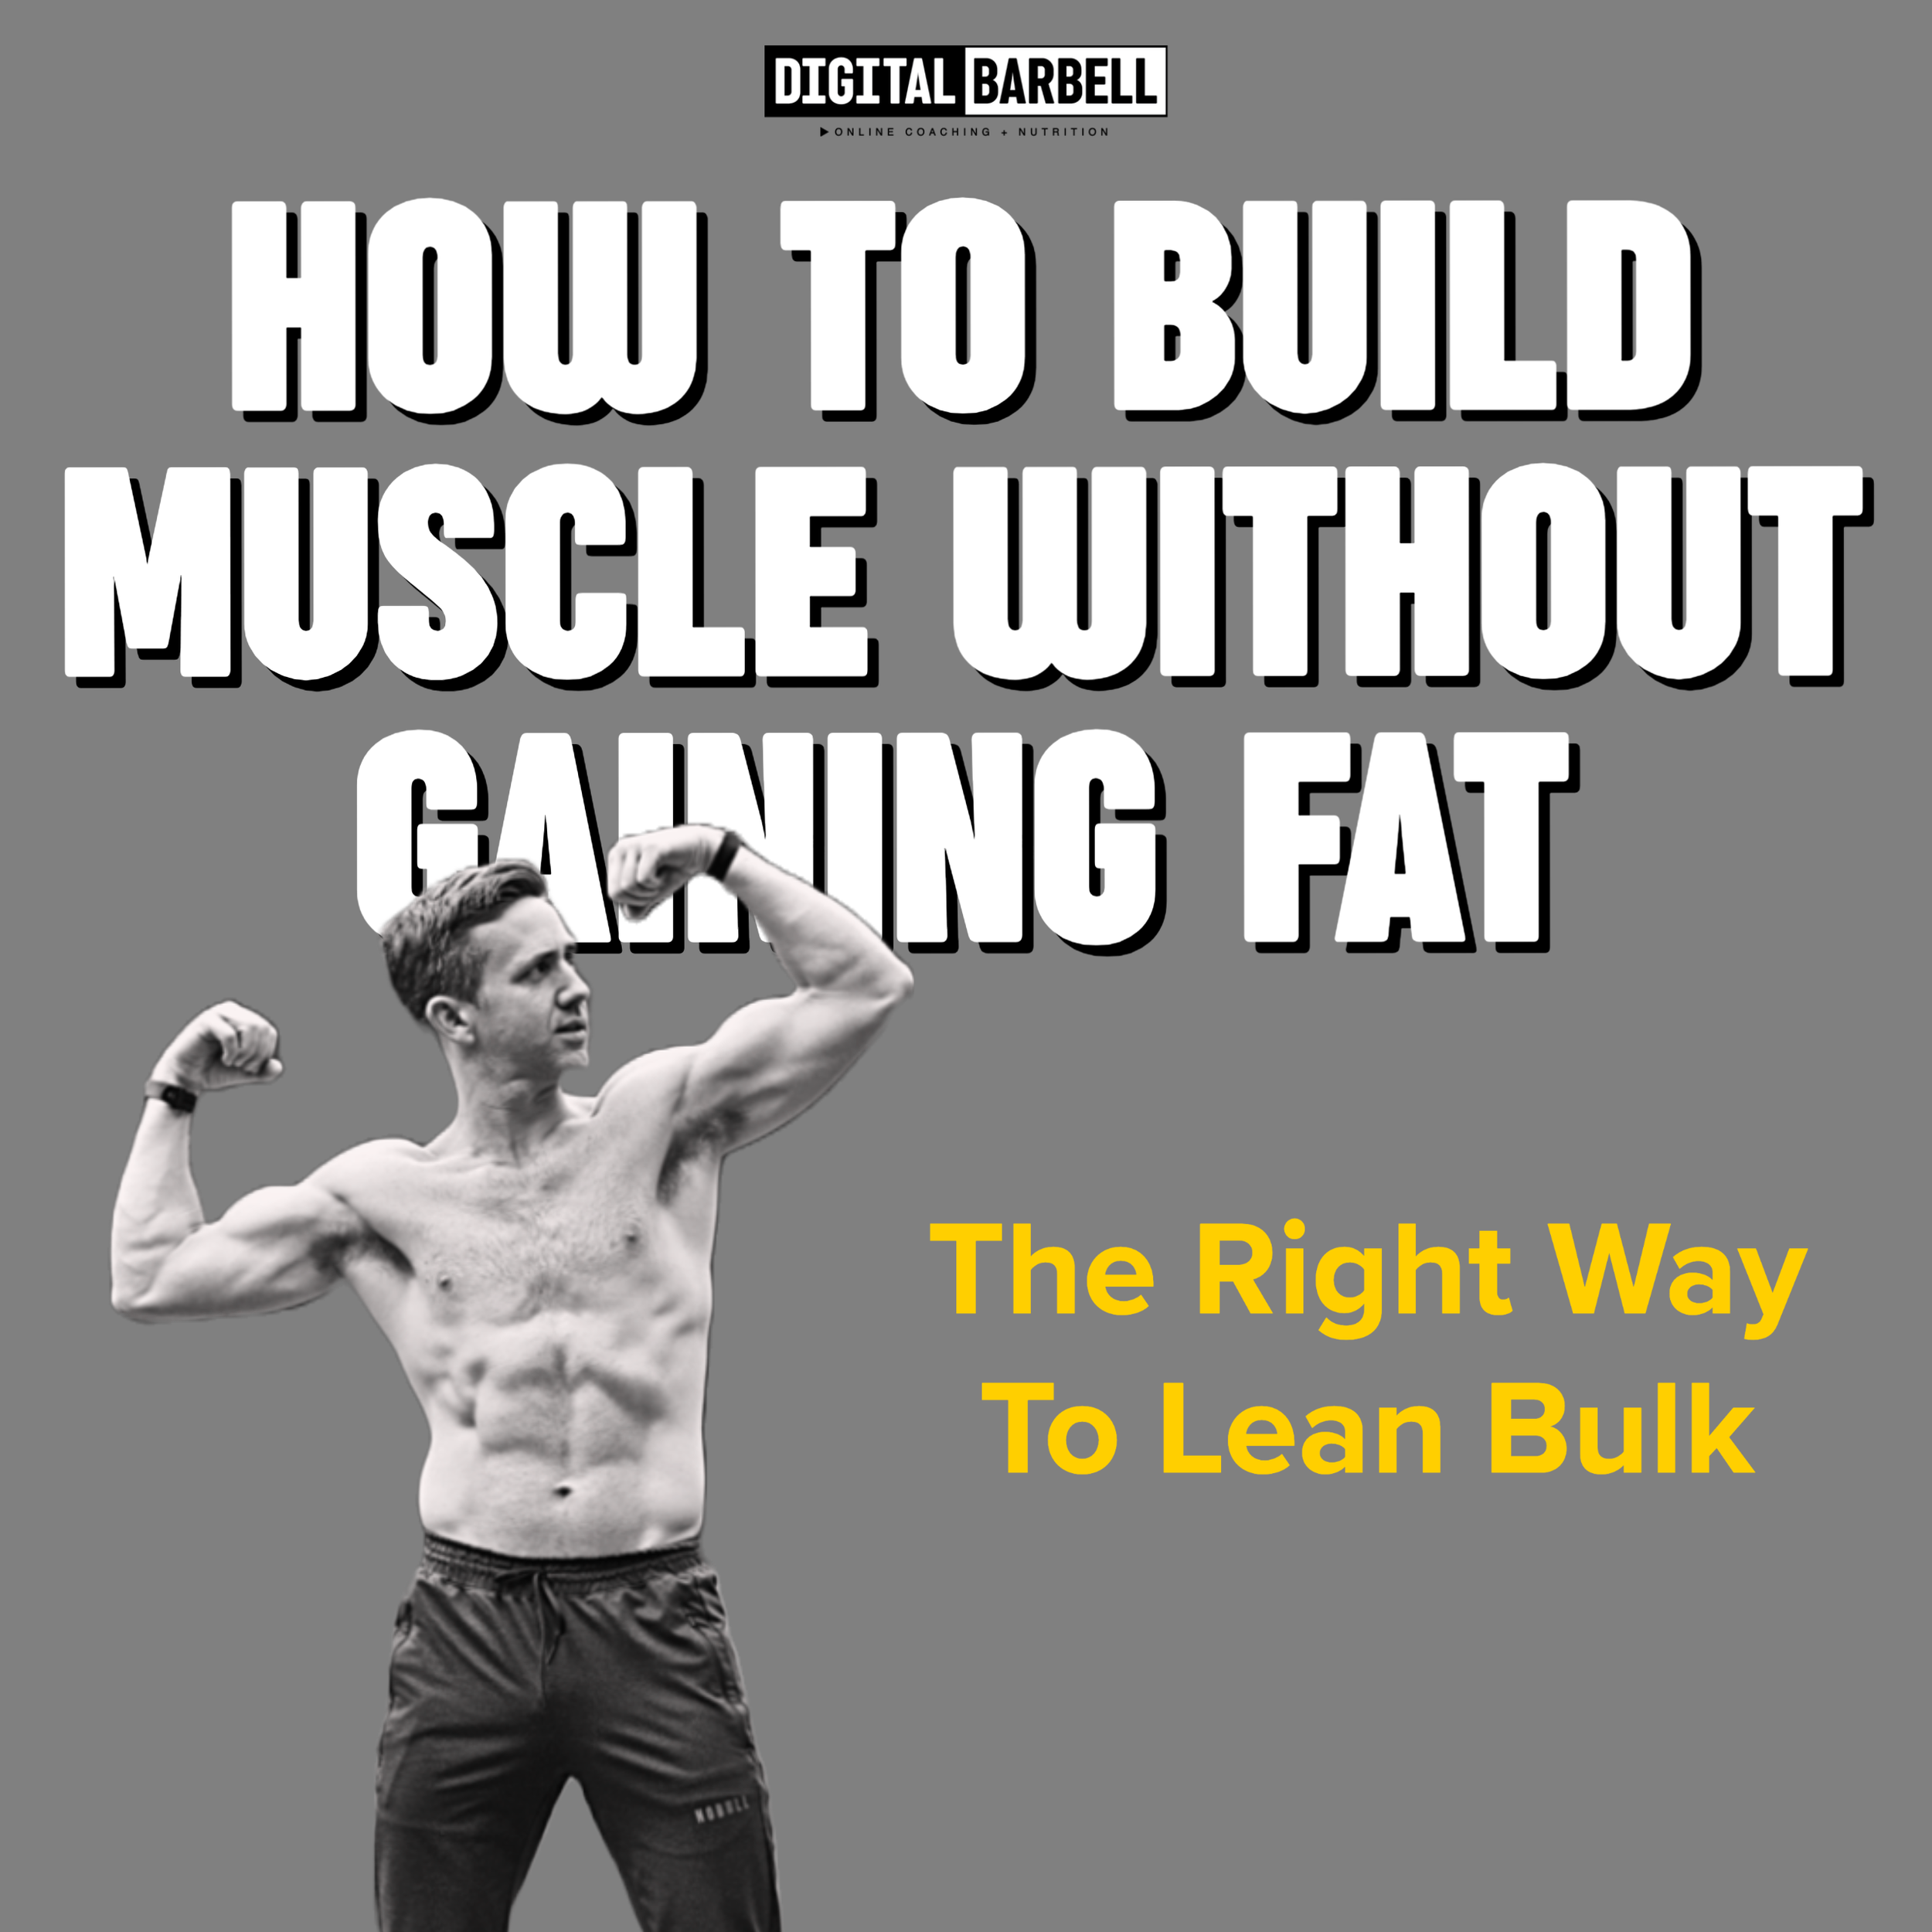 How to Do a Lean Bulk